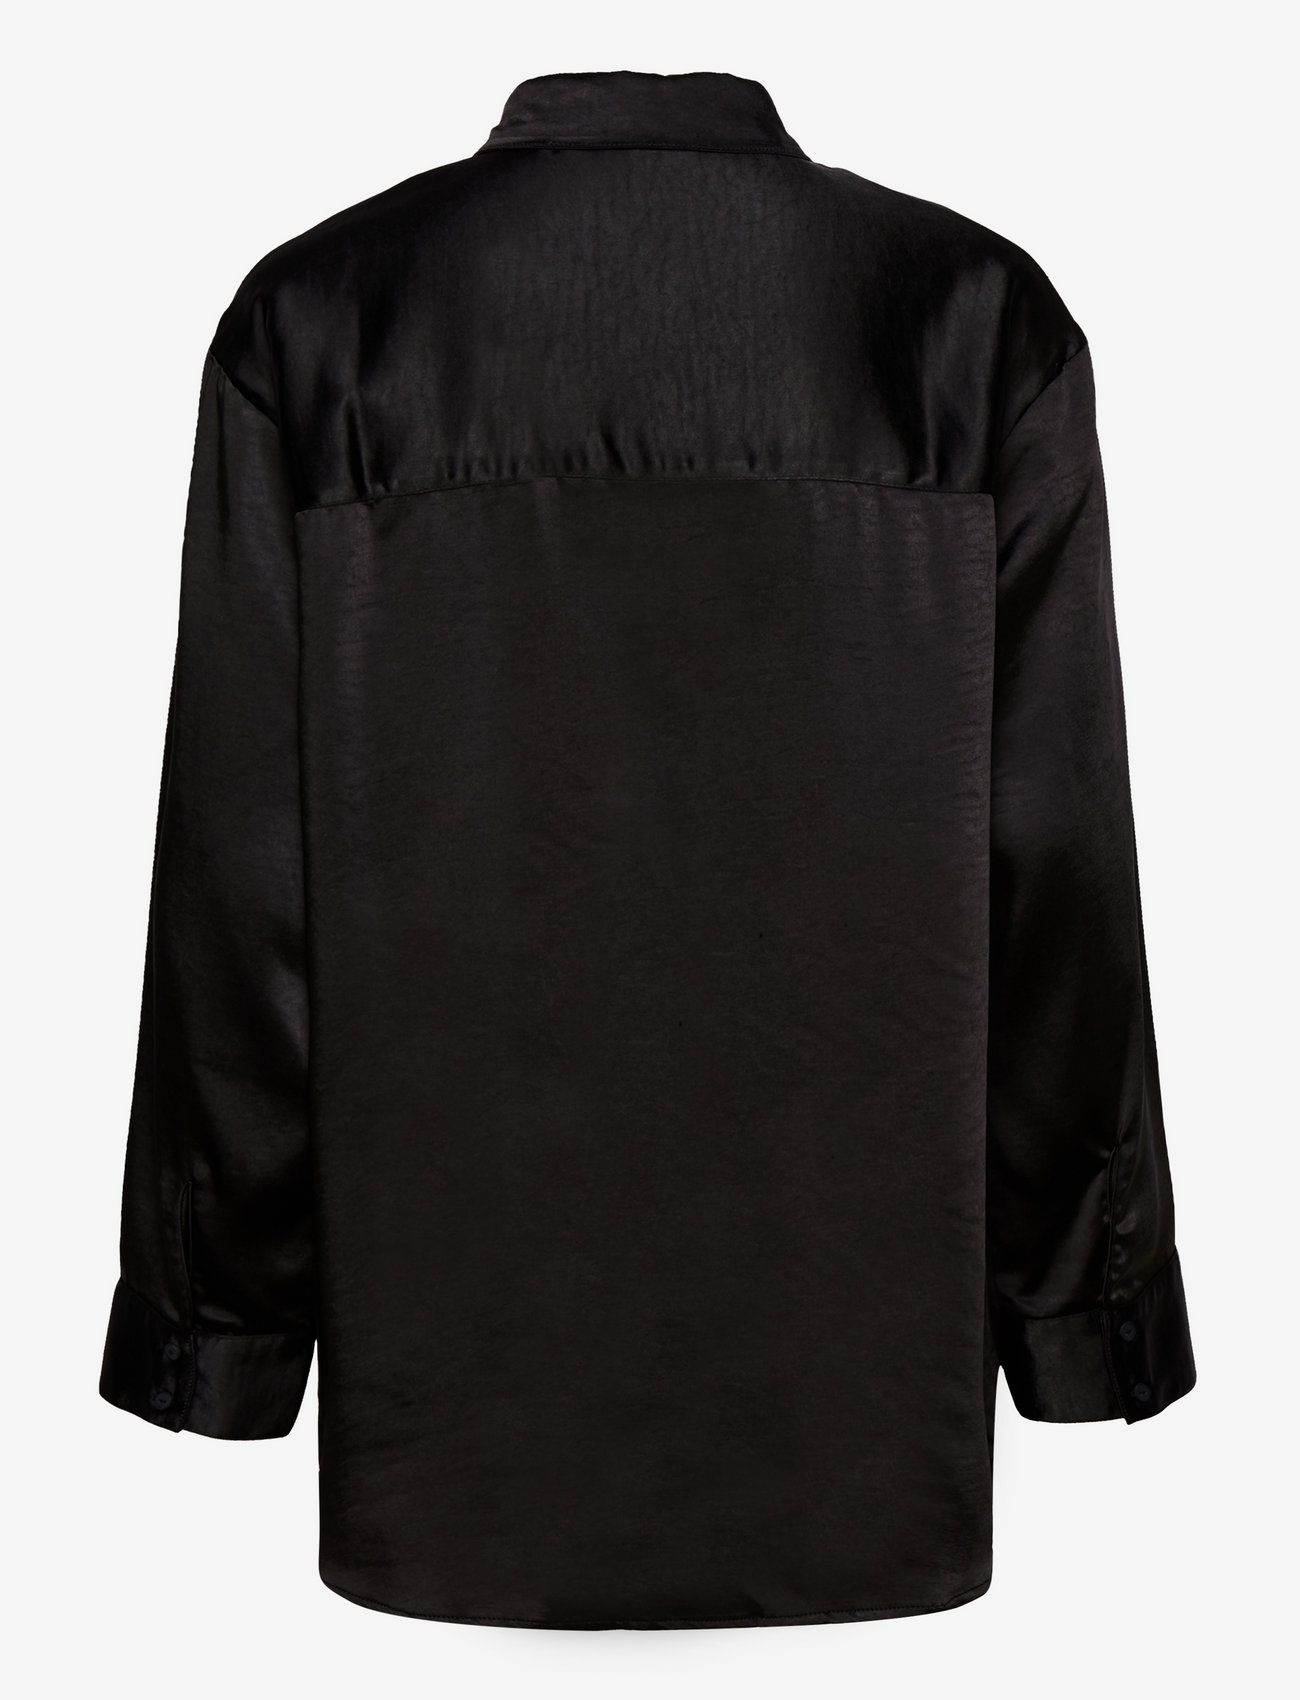 bzr - Satina Utilla shirt - langermede skjorter - black - 1